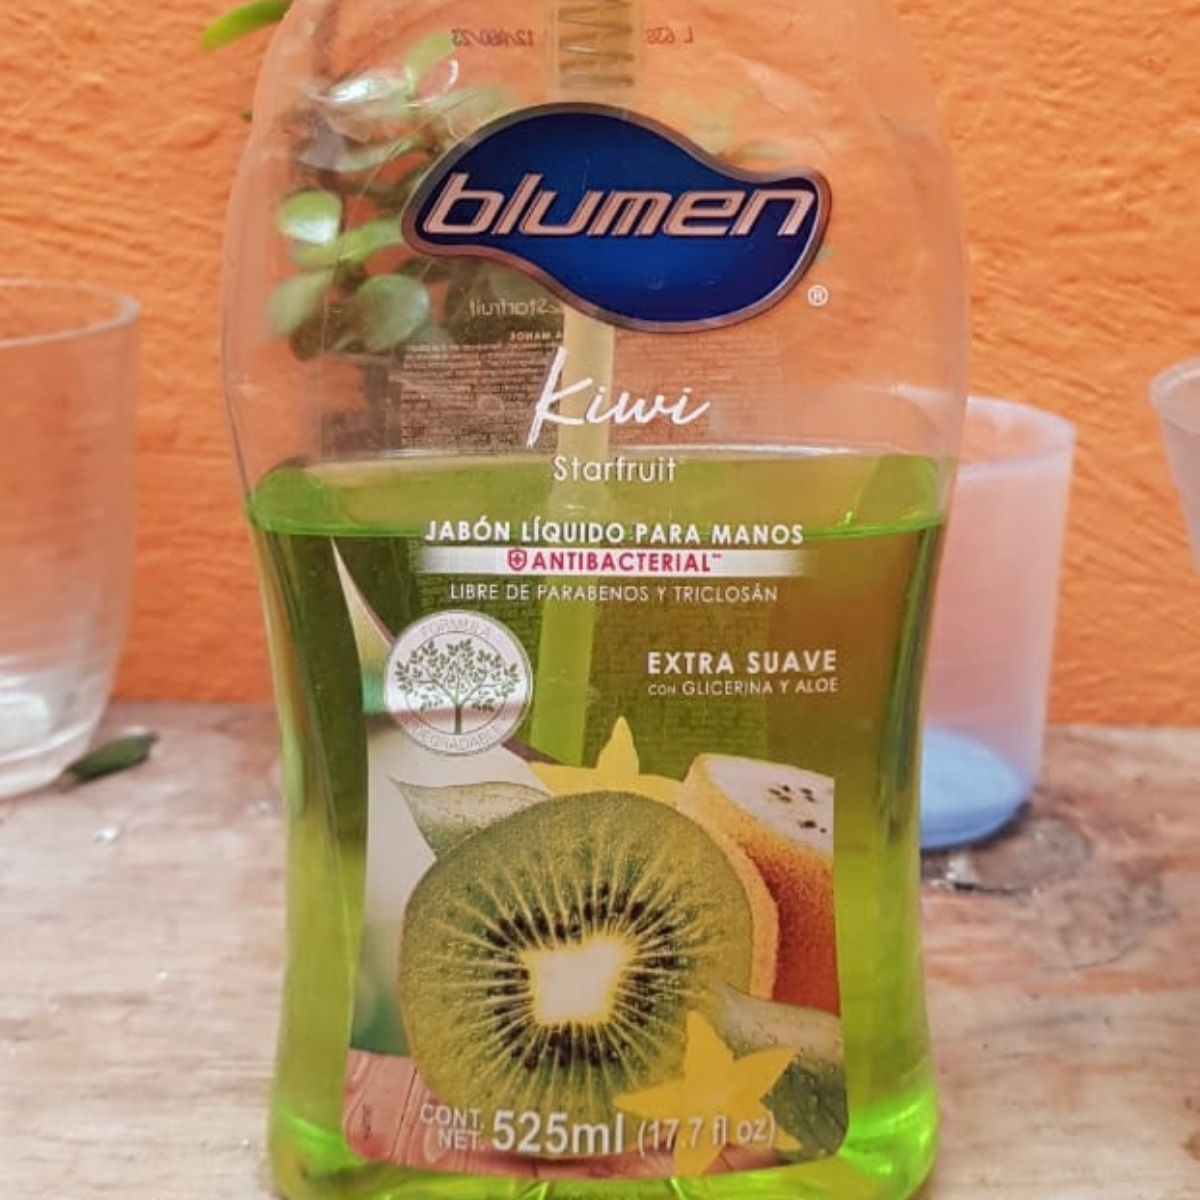 Blumen Jabon liquido antibacterial para manos aroma kiwi Reviews